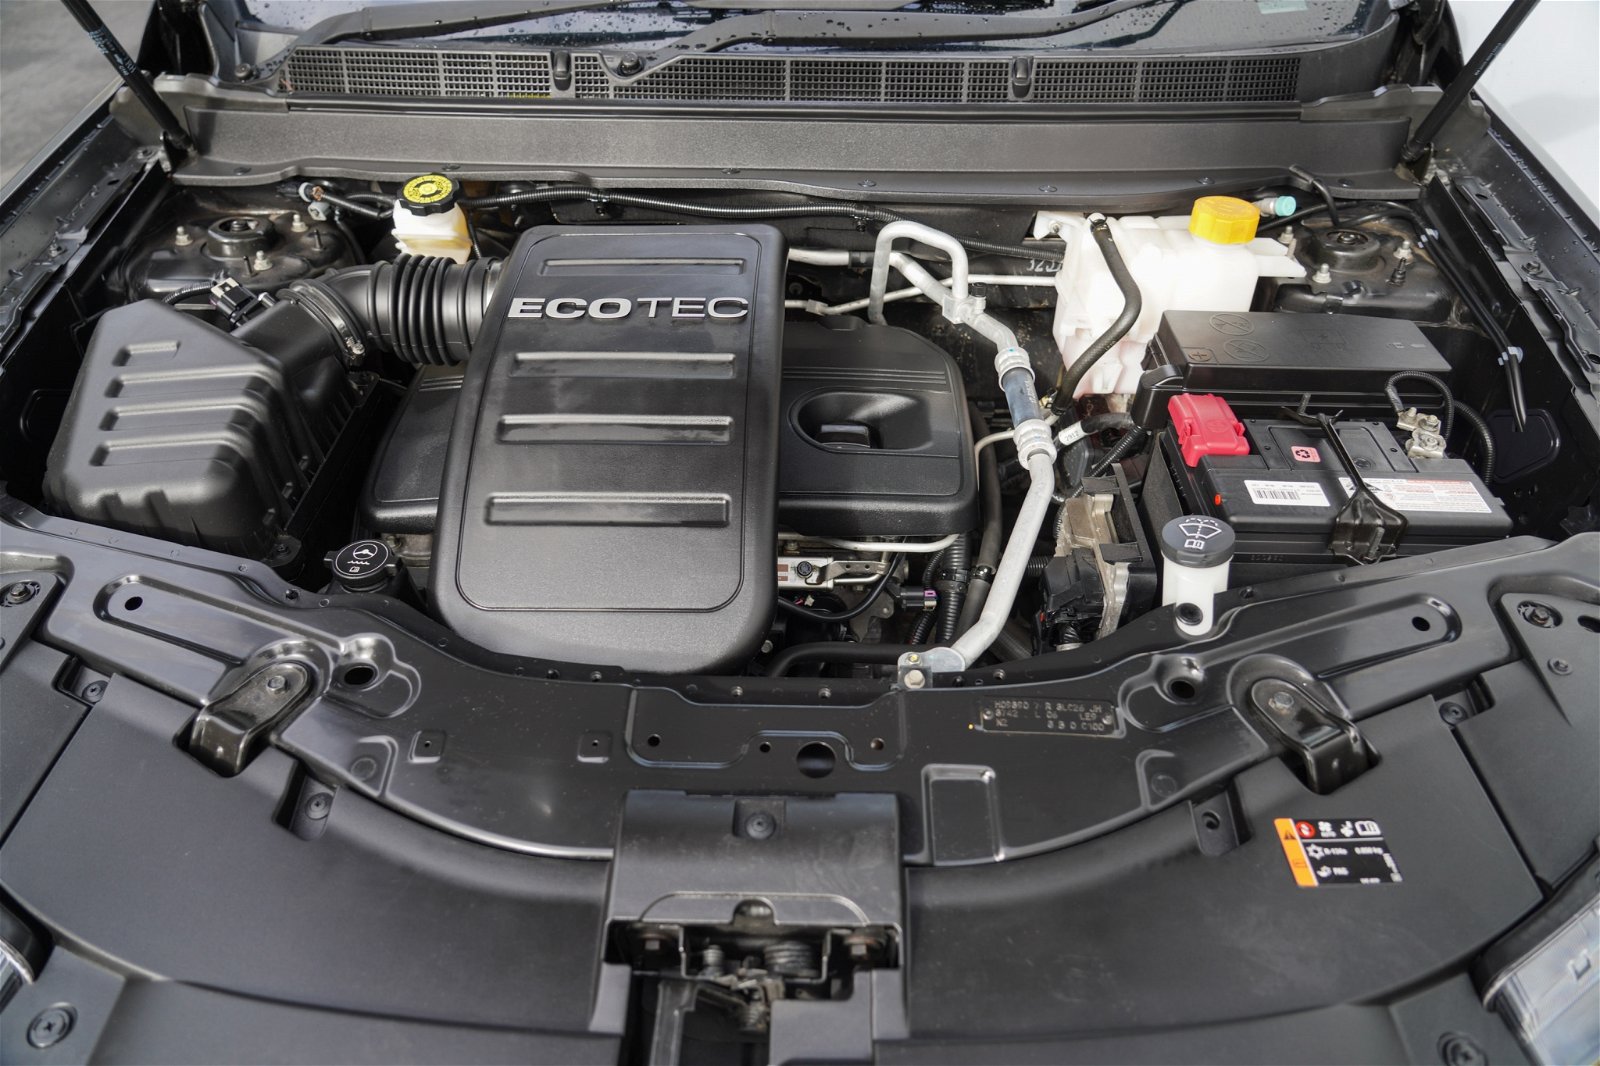 2018 Holden Captiva LS Equipe 2.4P 6A 4Dr Wagon